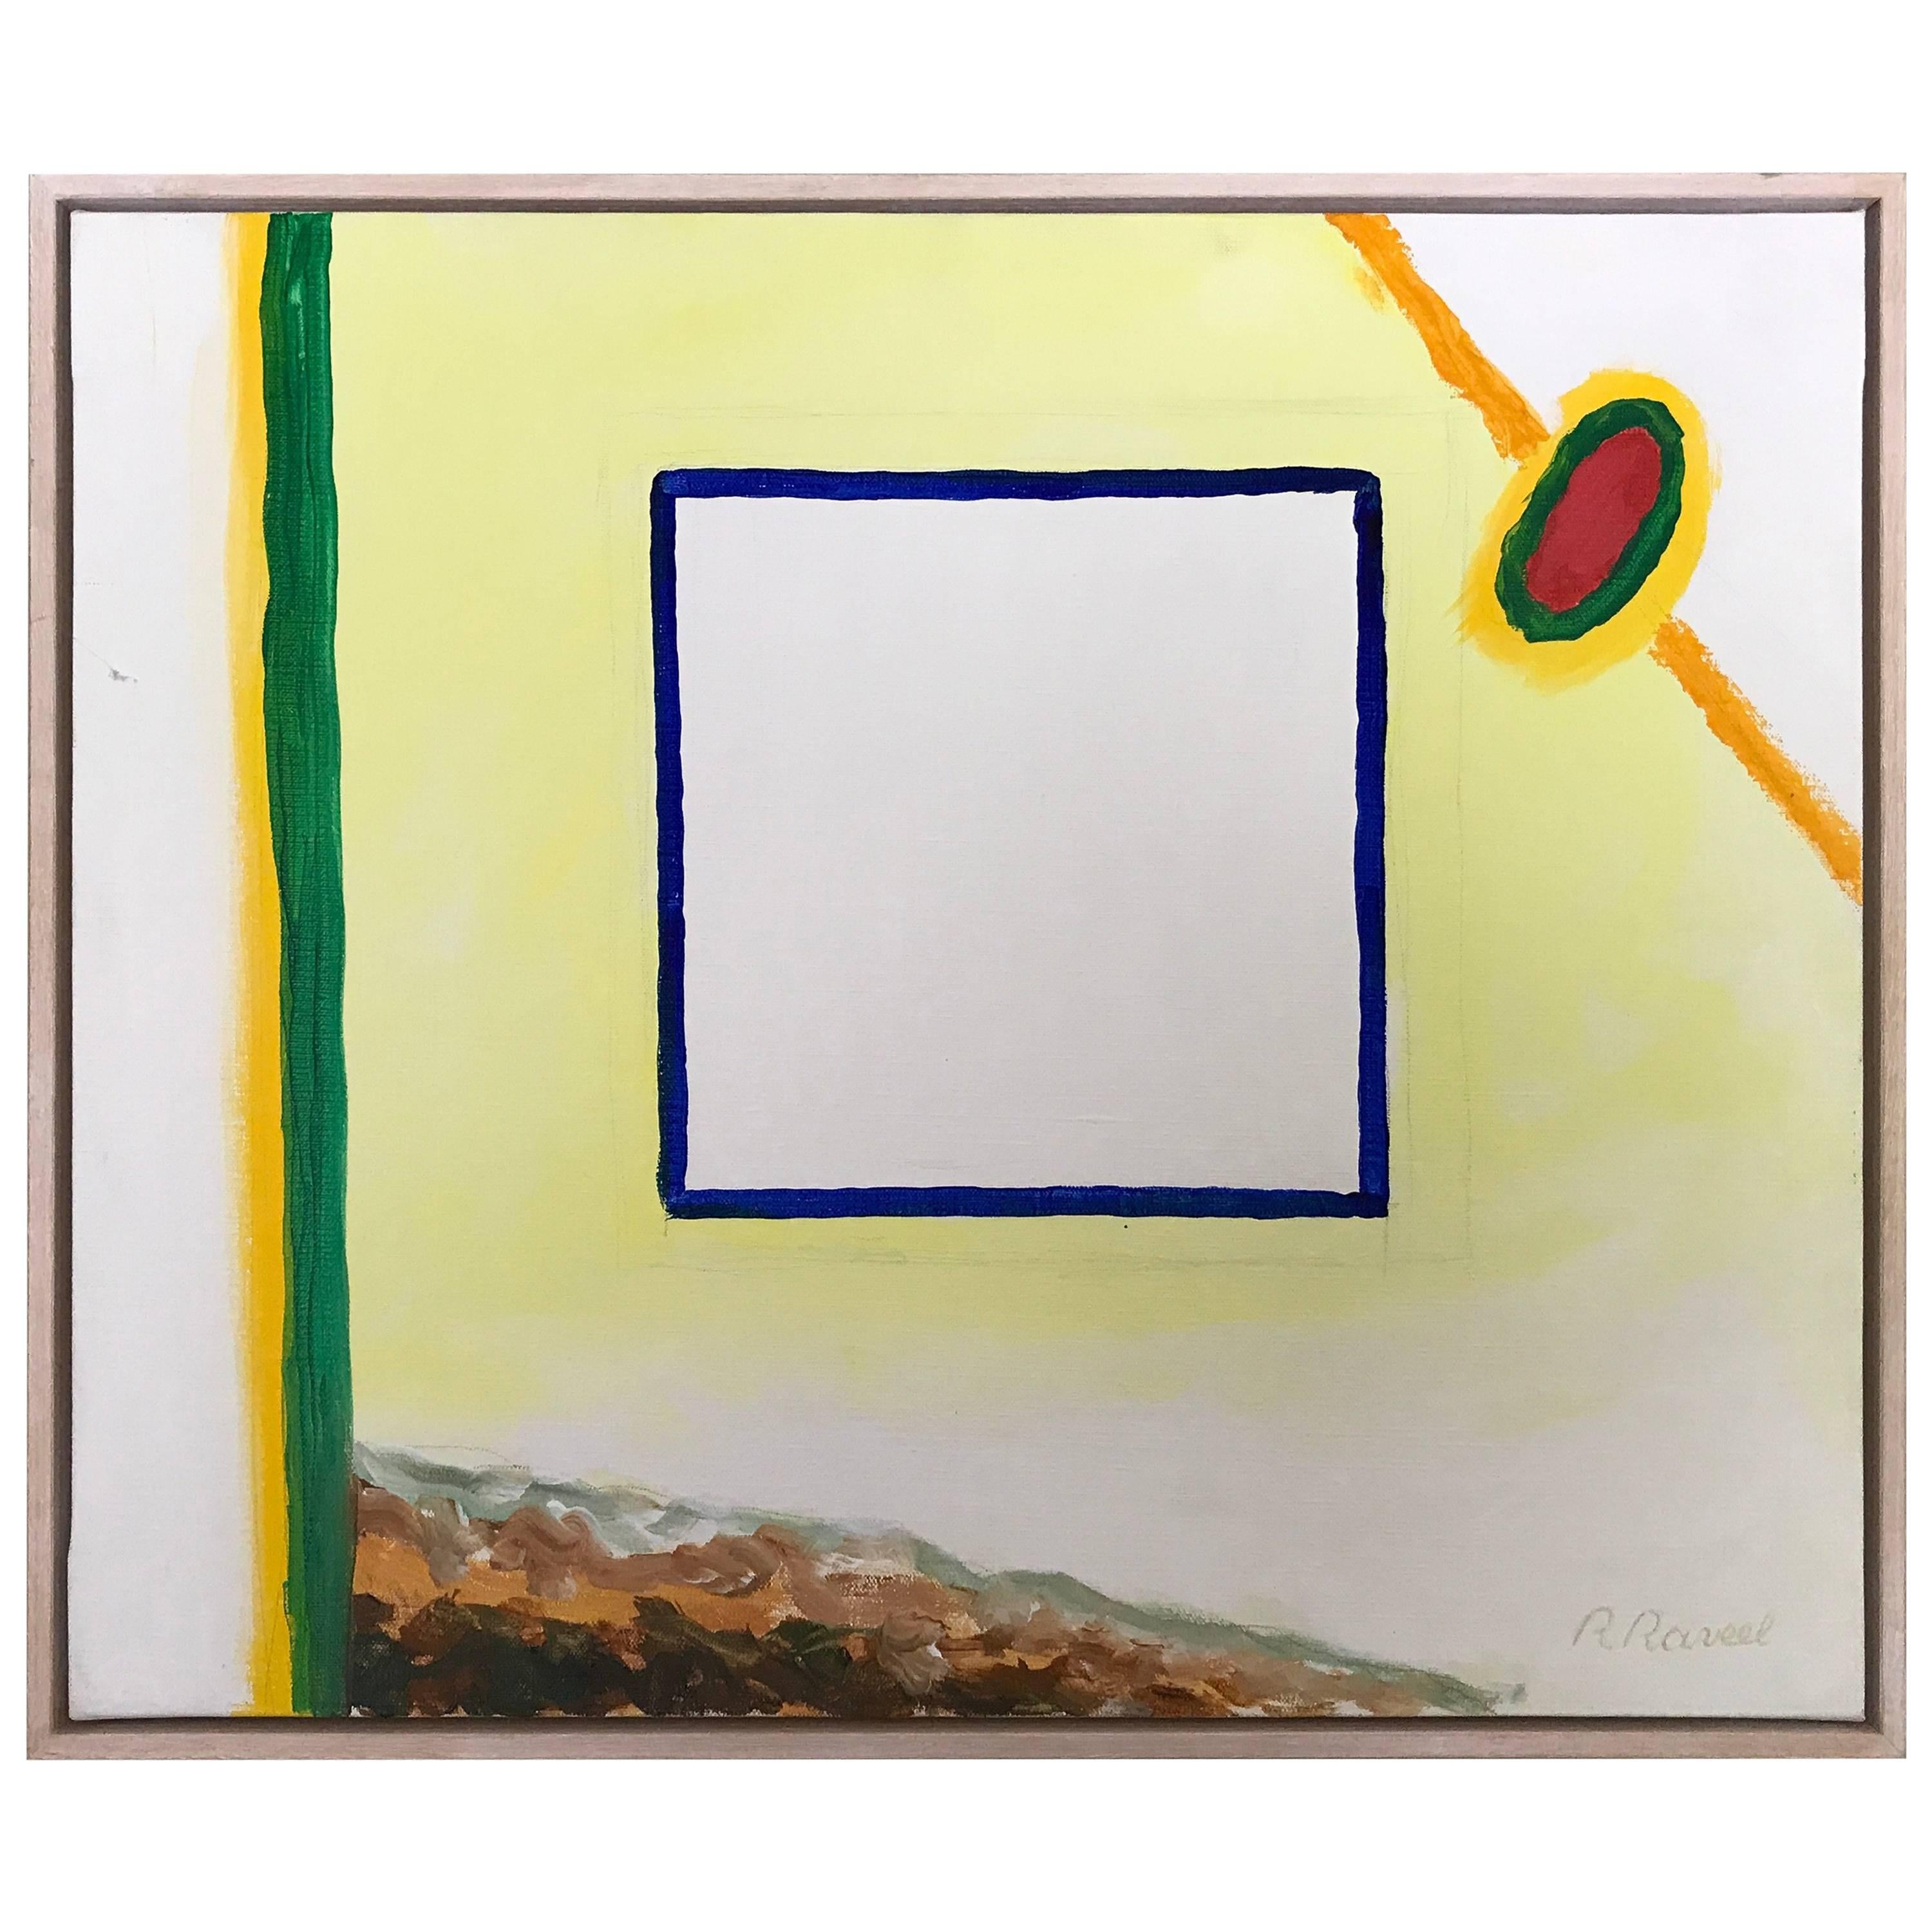 Roger Raveel "Mister Mondriaan" Title 2002 Oil on Canvas For Sale